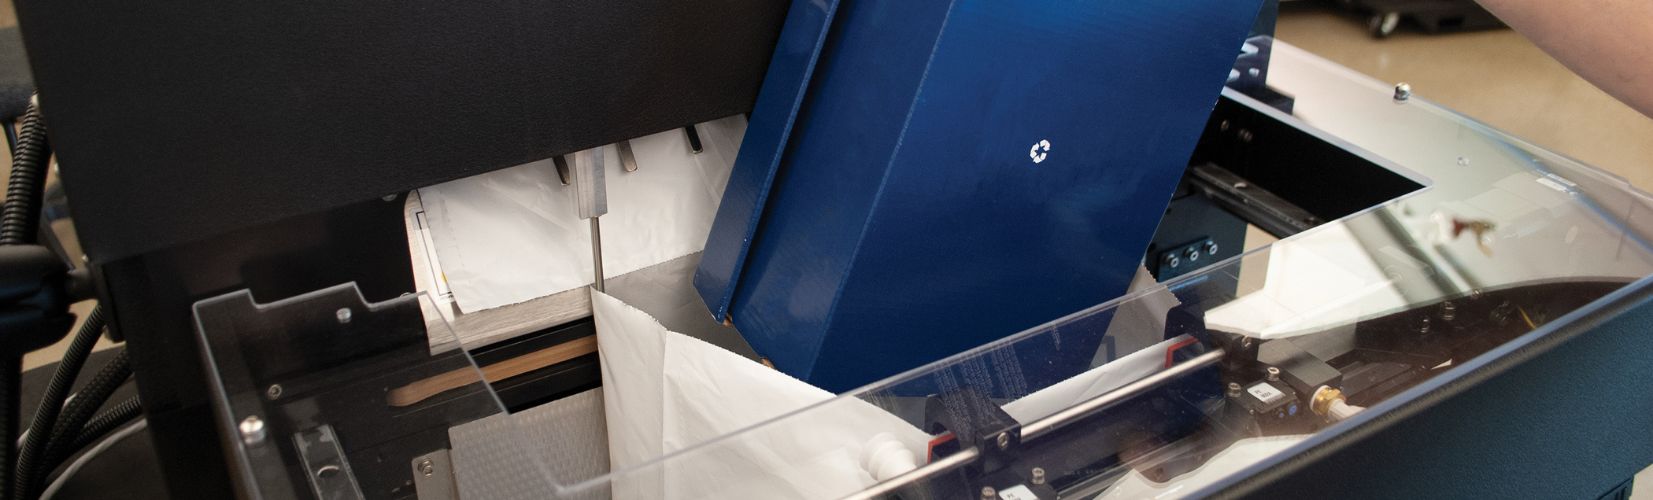 Maquina para fabricar bolsas automatizada creando cajas de zapatos azul marino